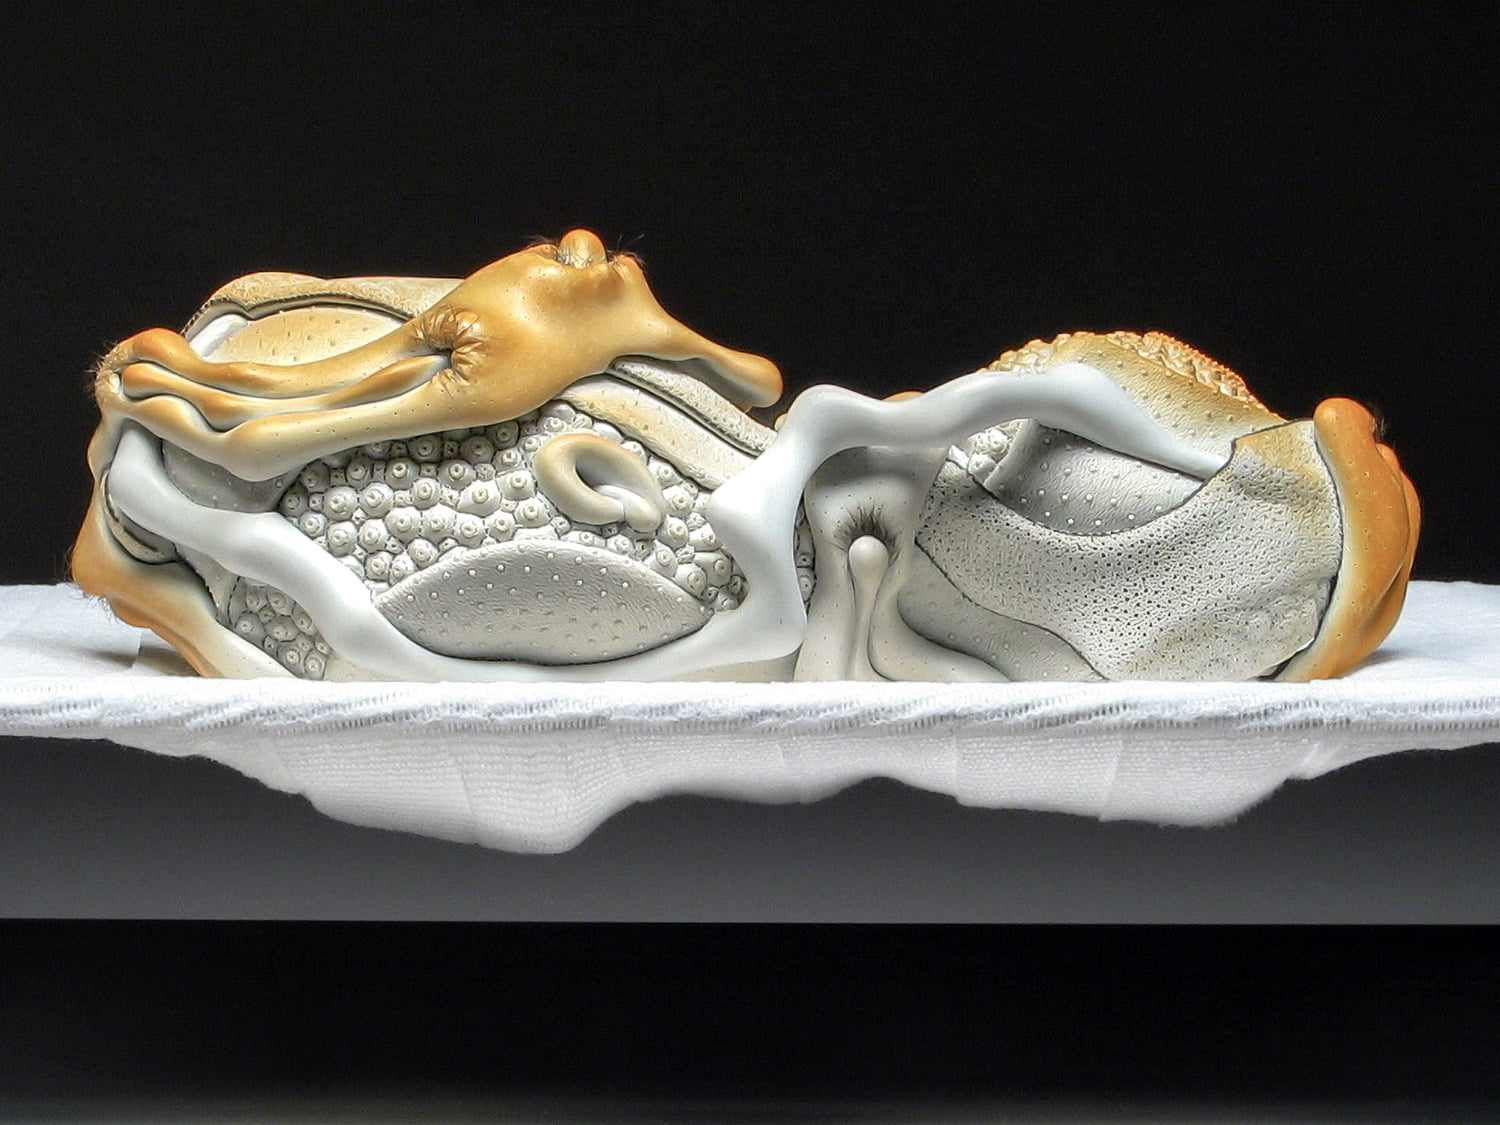 Jason Briggs "Rest". Porcelain, hair, and mixed media. Sculptural ceramic art object.